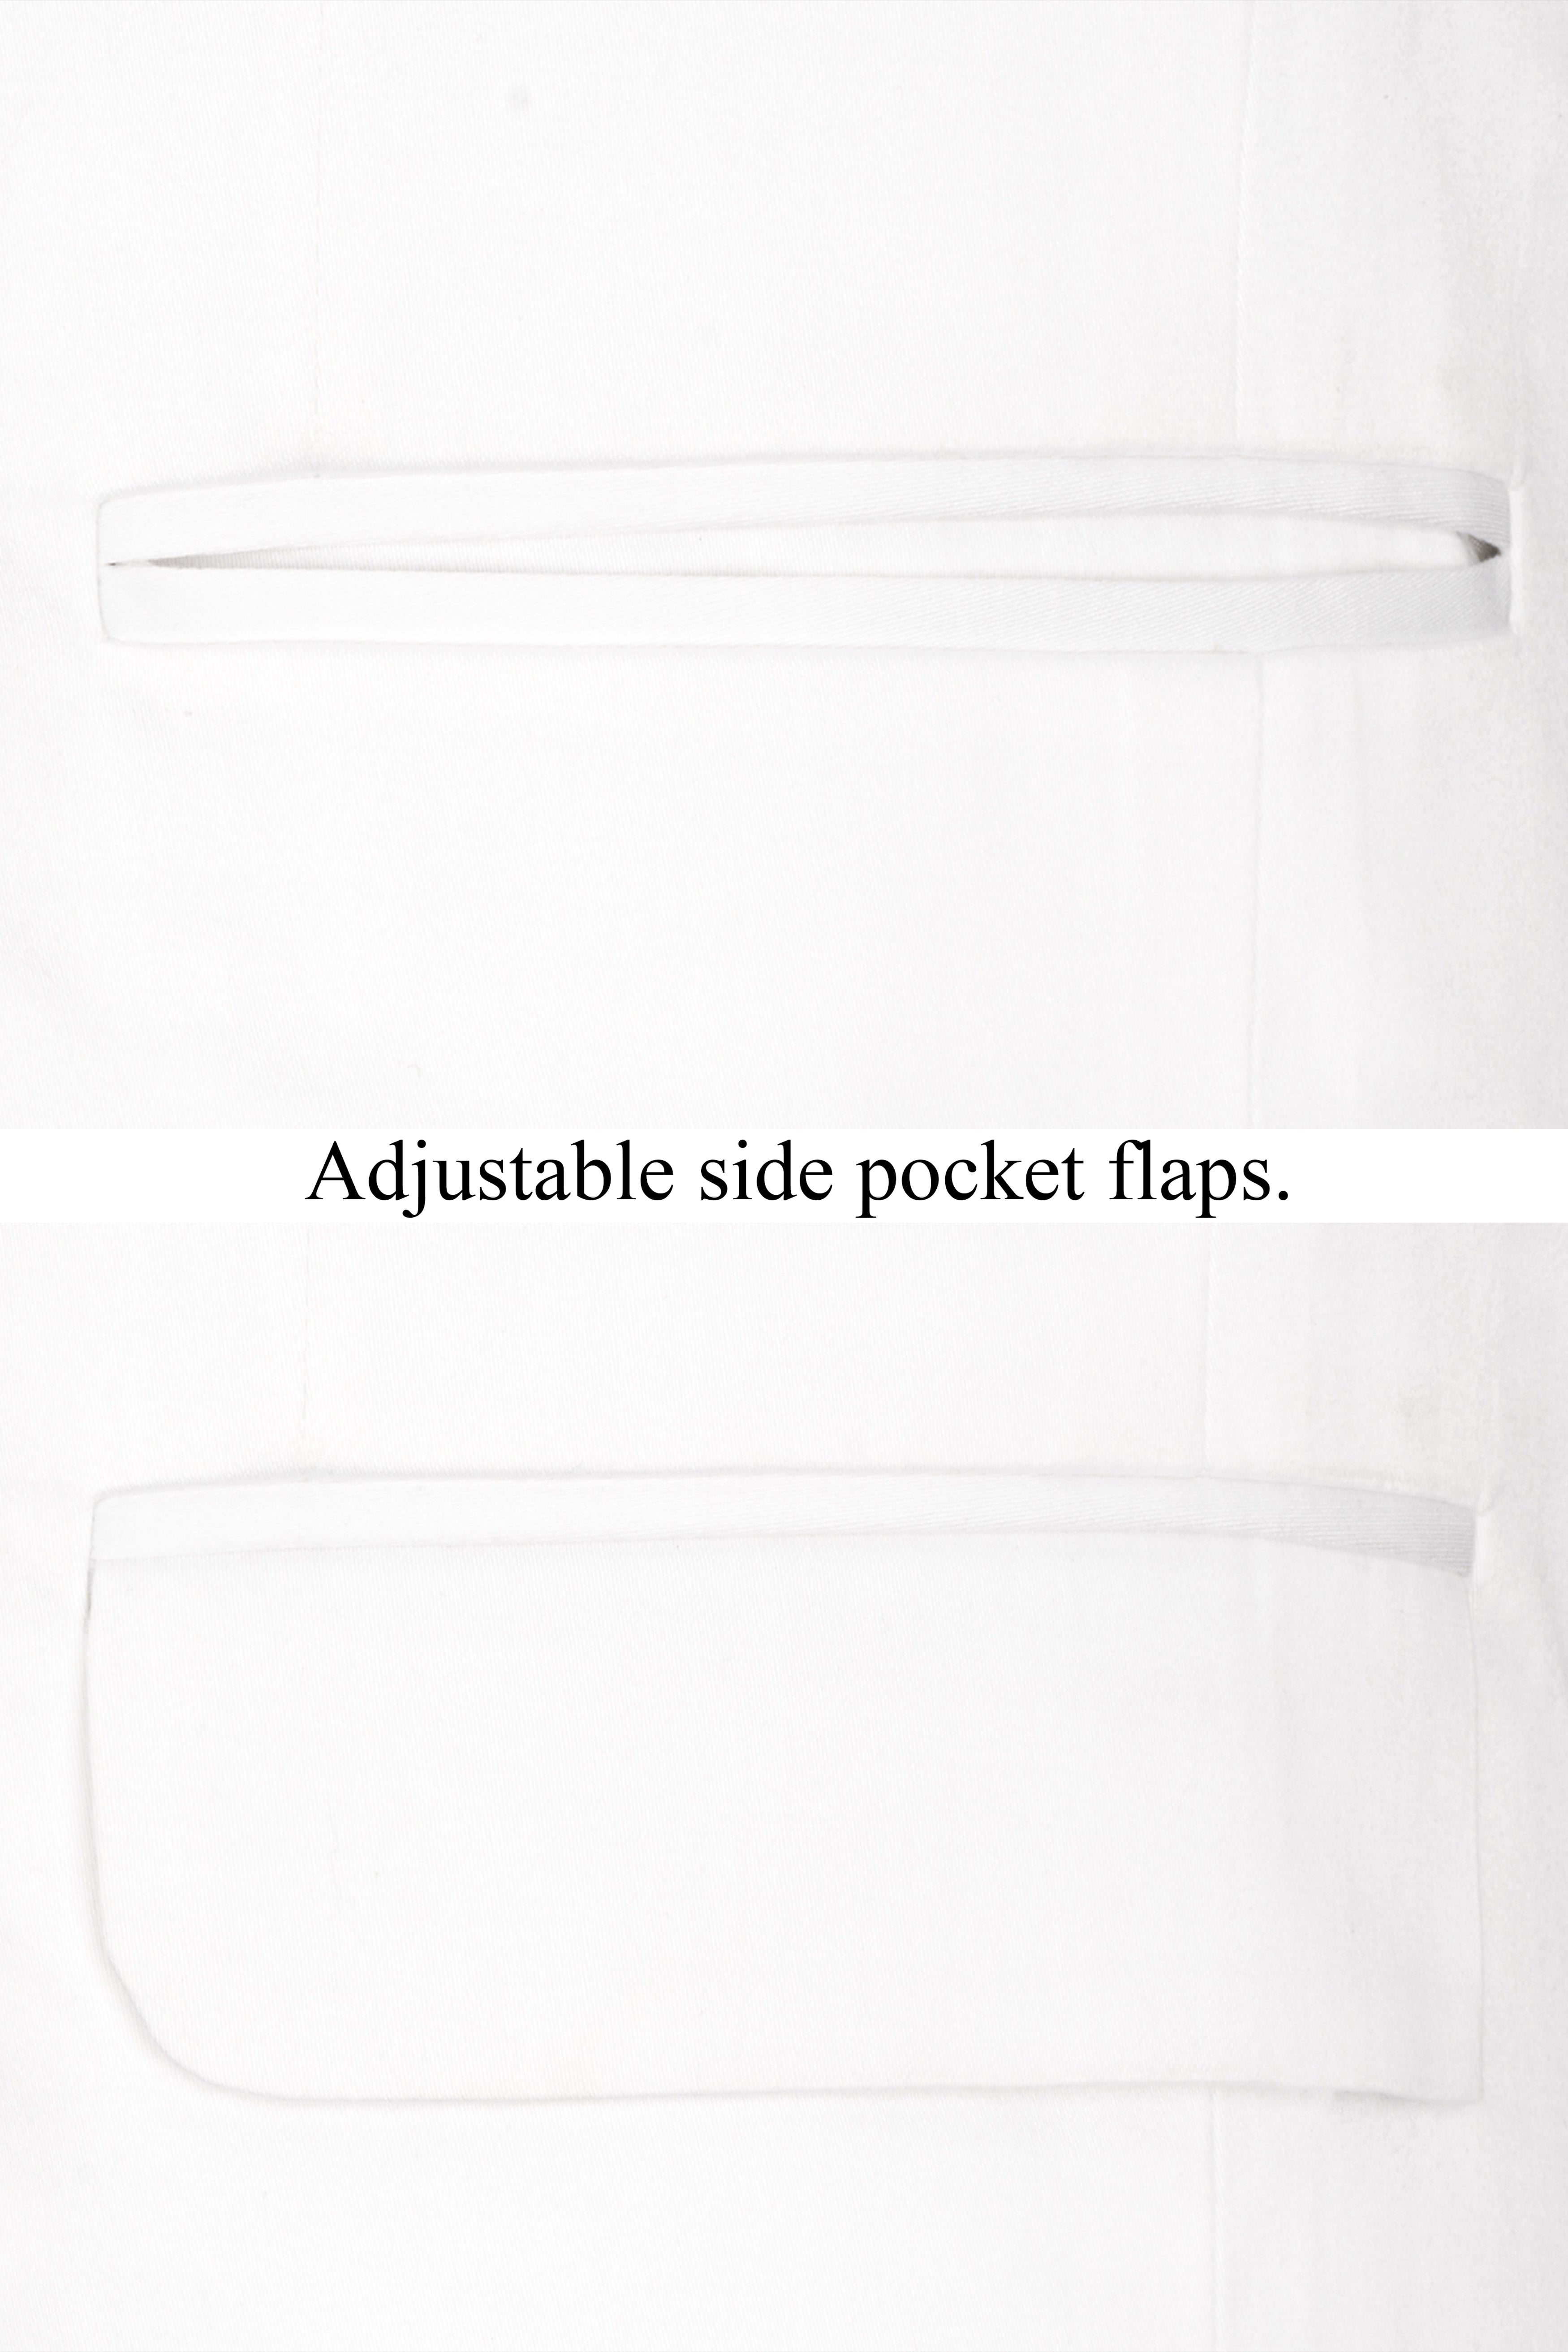 Bright White Cross Placket Stretchable Premium Cotton Bandhgala traveler Blazer